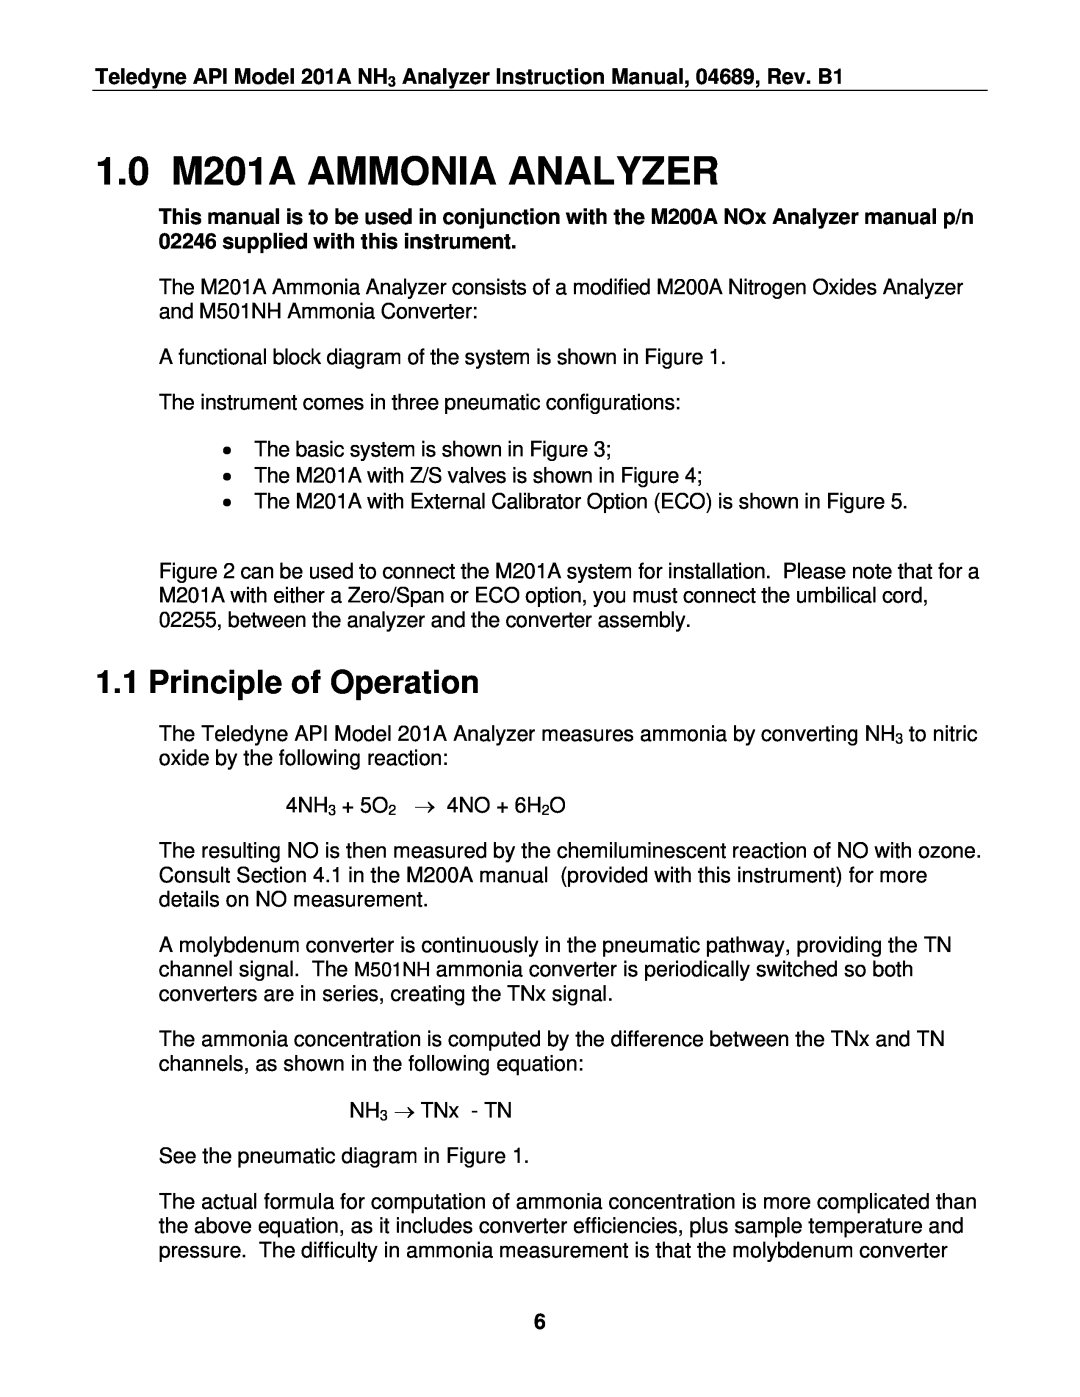 Teledyne manual 1.0 M201A AMMONIA ANALYZER, Principle of Operation 